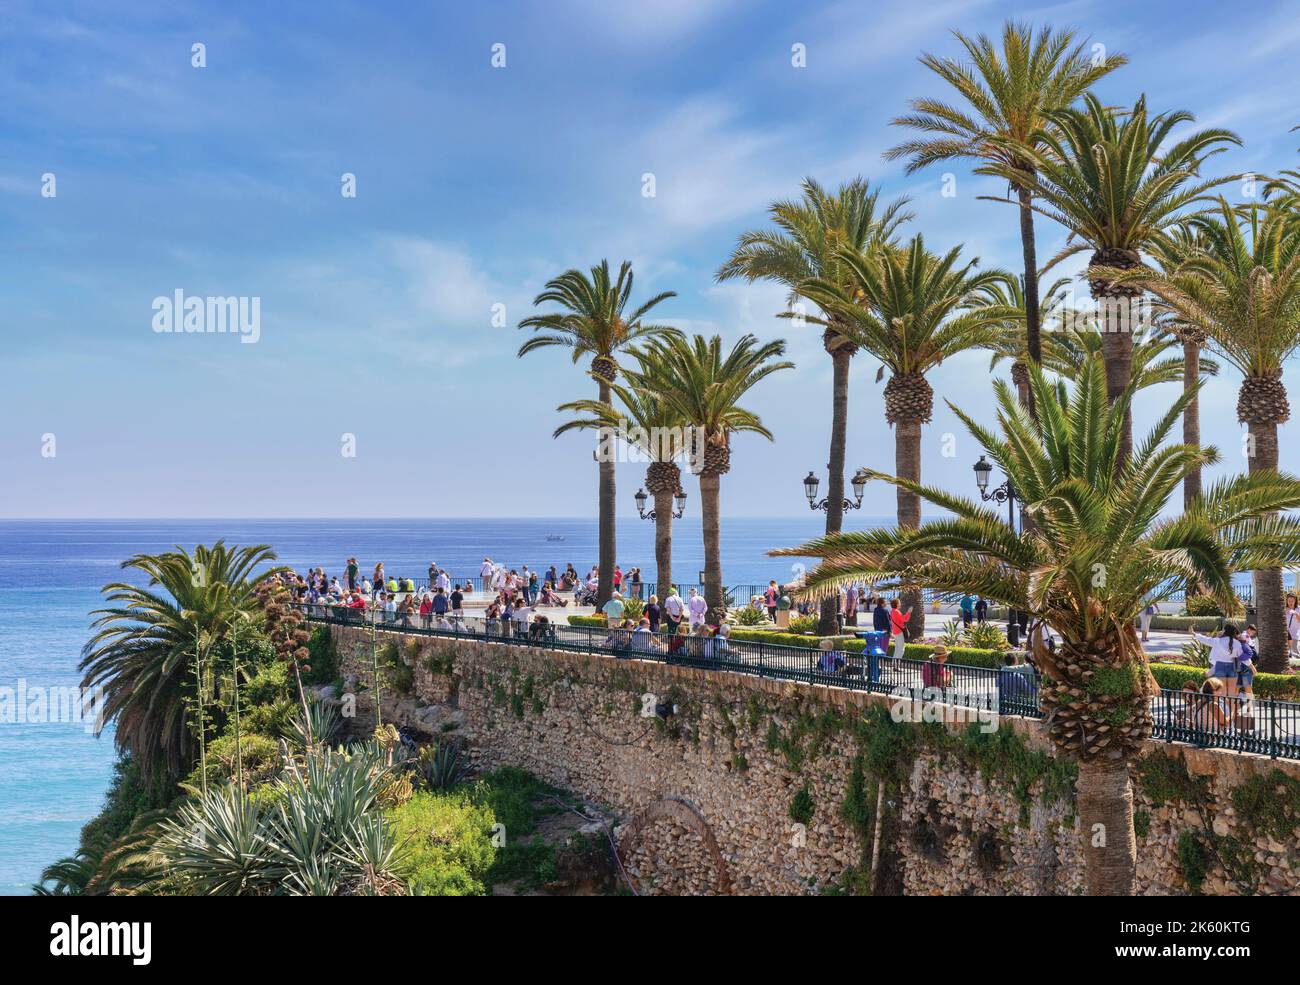 Balcon de Europa, oder Balkon Europas, Nerja, Costa del Sol, Provinz Malaga, Andalusien, Südspanien. Stockfoto